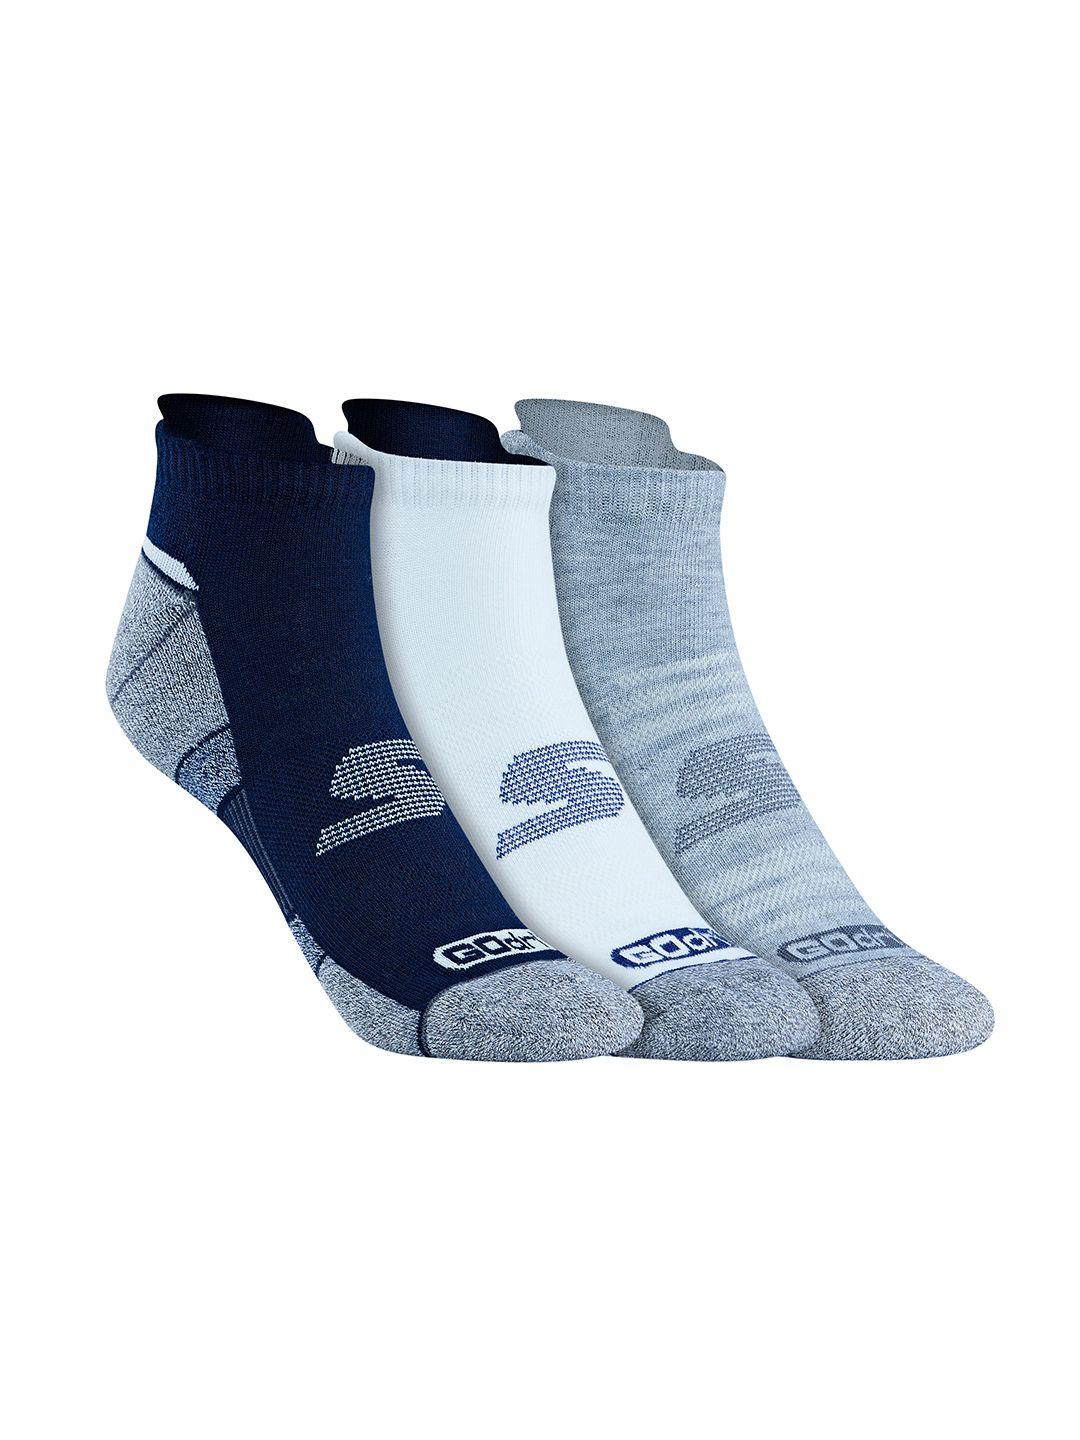 skechers-women-pack-of-3-patterned-terry-low-cut-ankle-length-socks